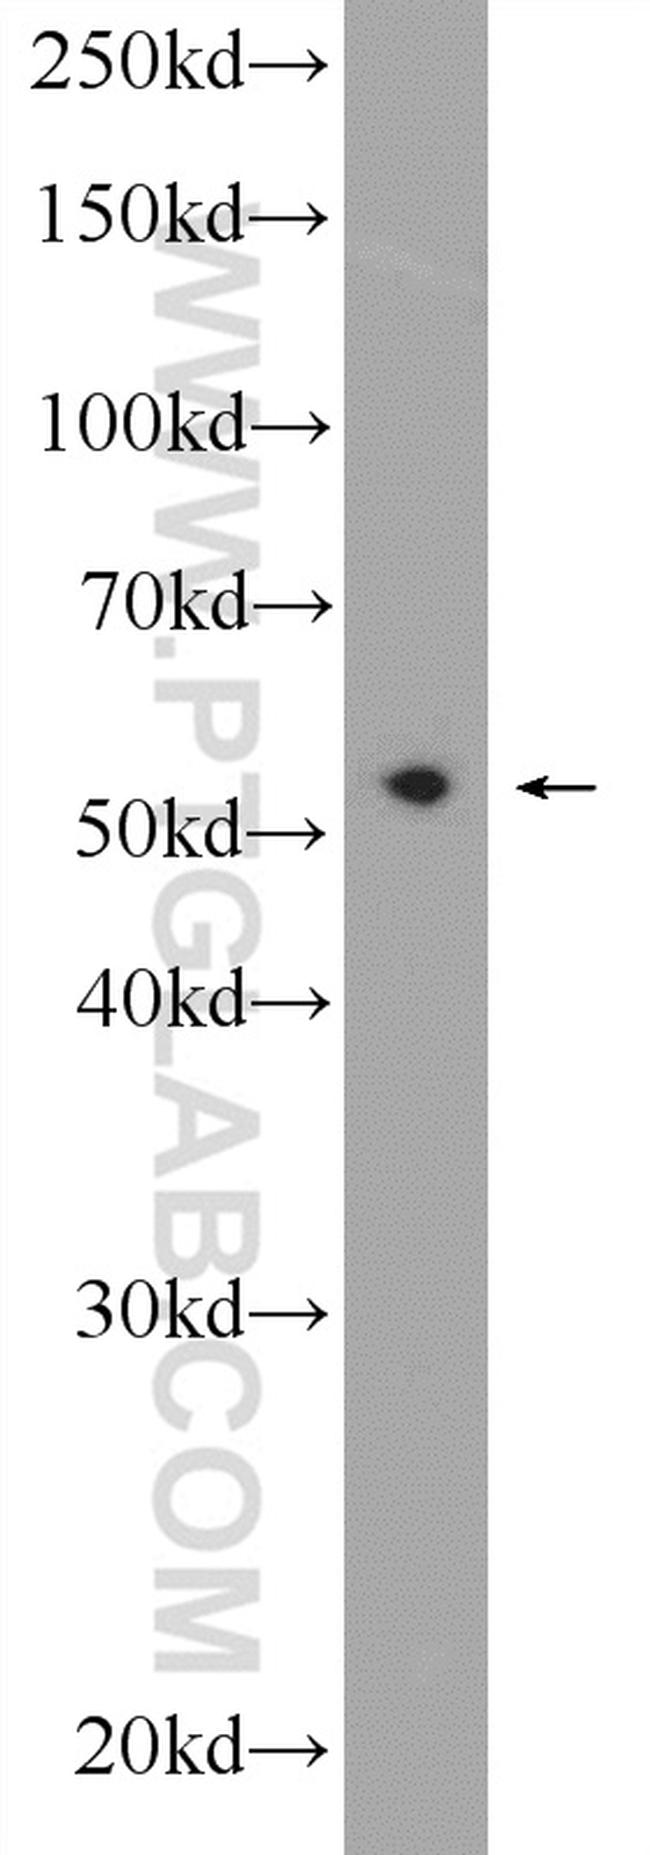 PDCD7 Antibody in Western Blot (WB)